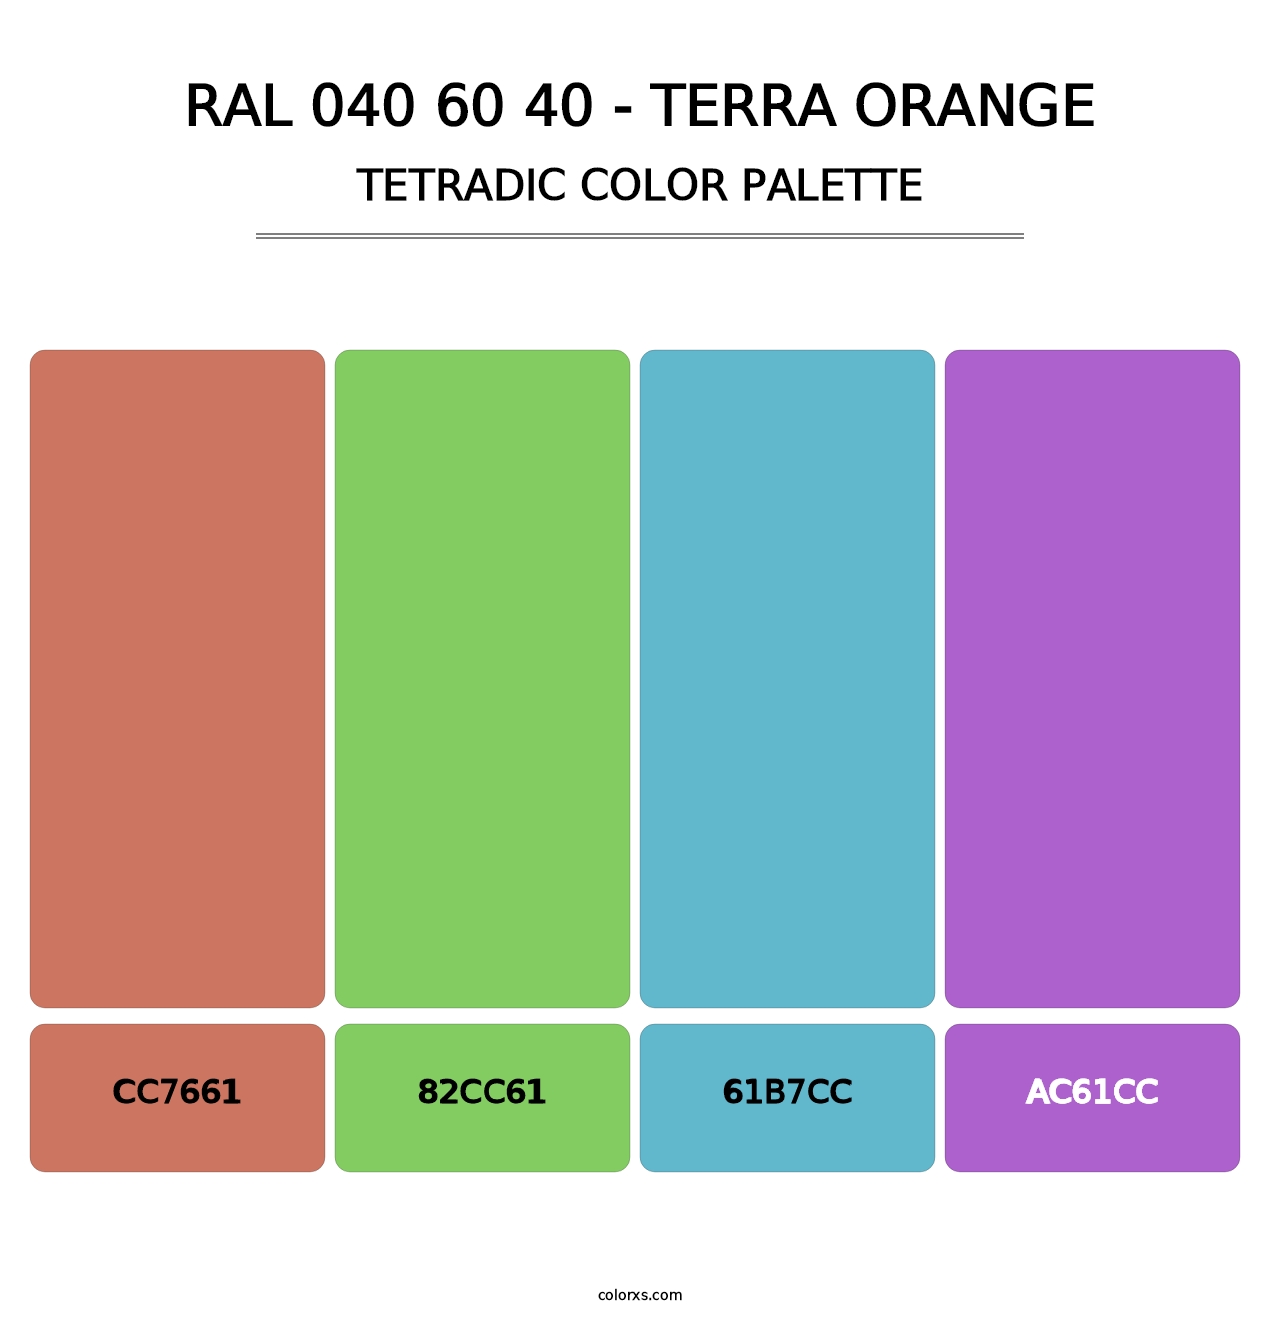 RAL 040 60 40 - Terra Orange - Tetradic Color Palette